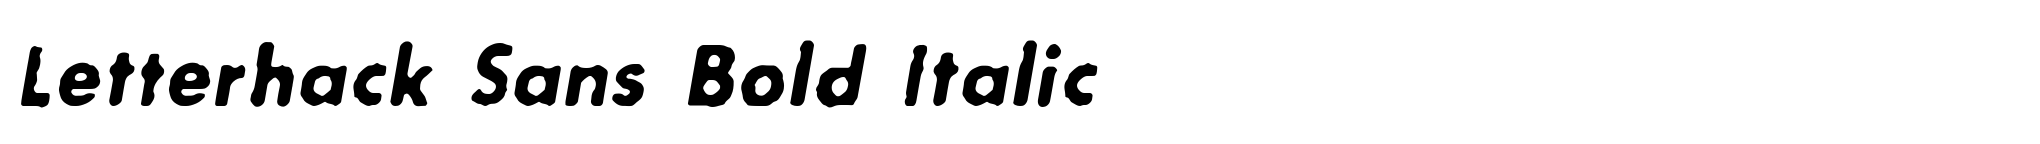 Letterhack Sans Bold Italic image